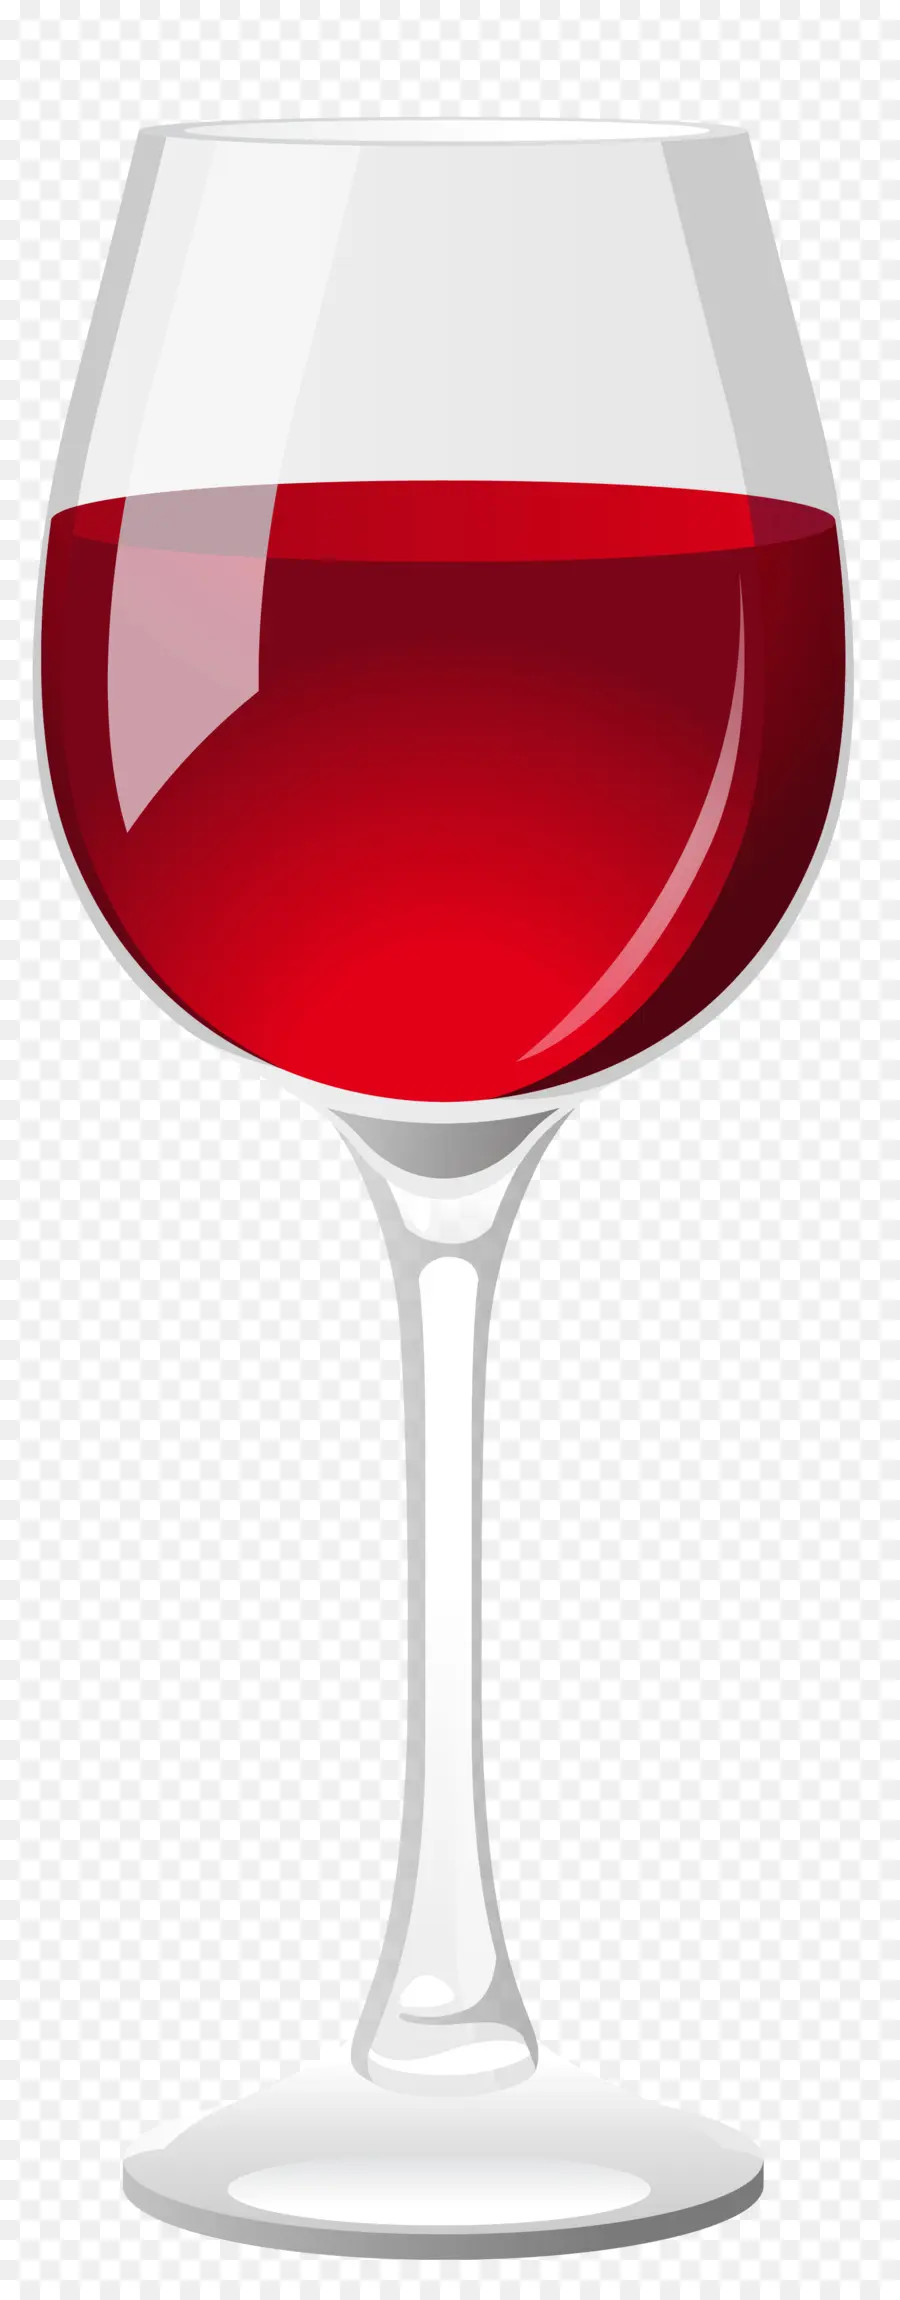 Kırmızı şarap，şarap PNG